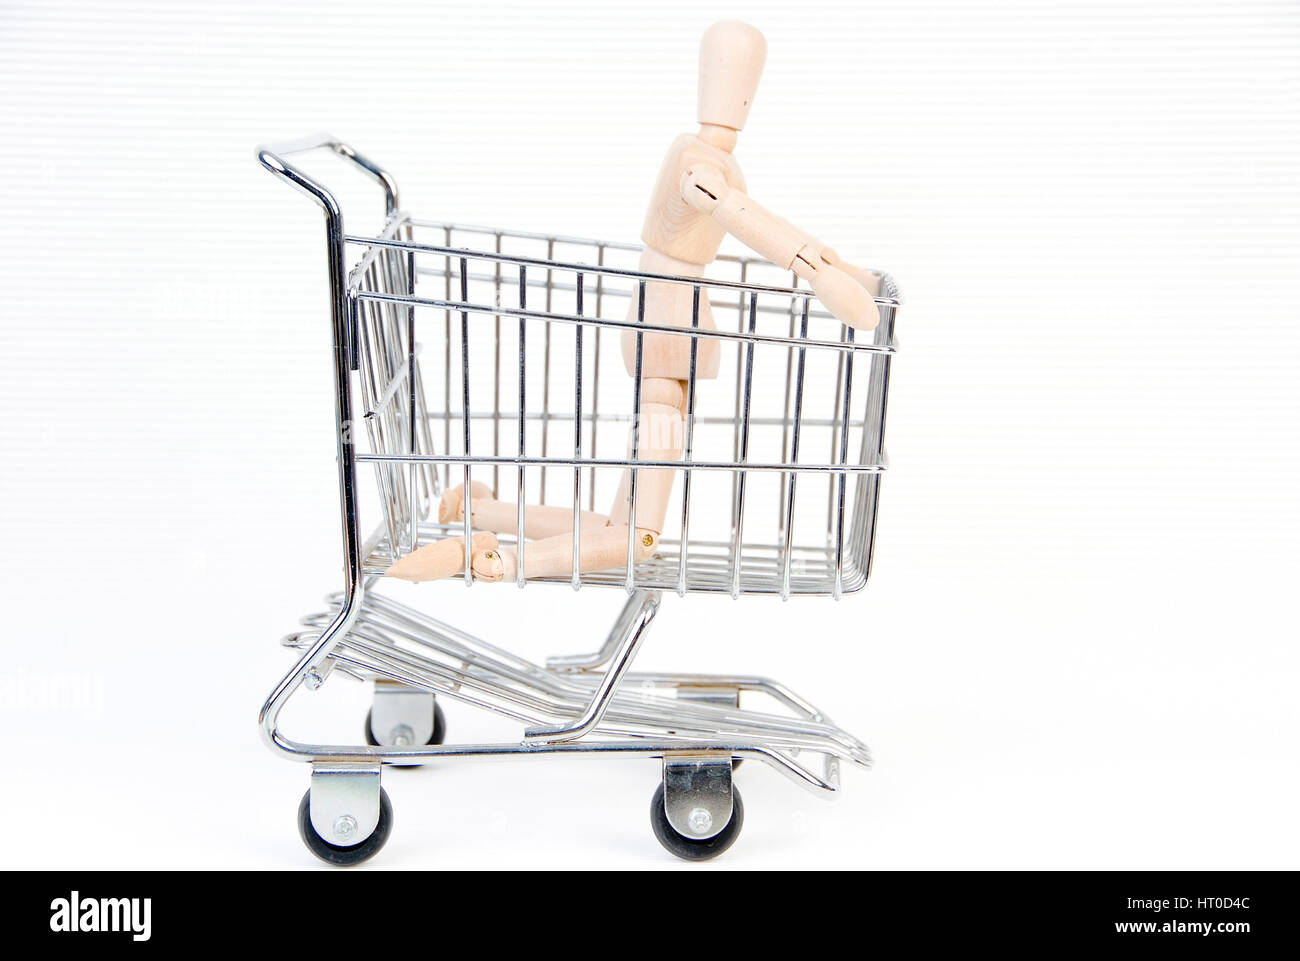 Gliederpuppe in Einkaufswagen - jointed doll in shopping trolley Stock Photo